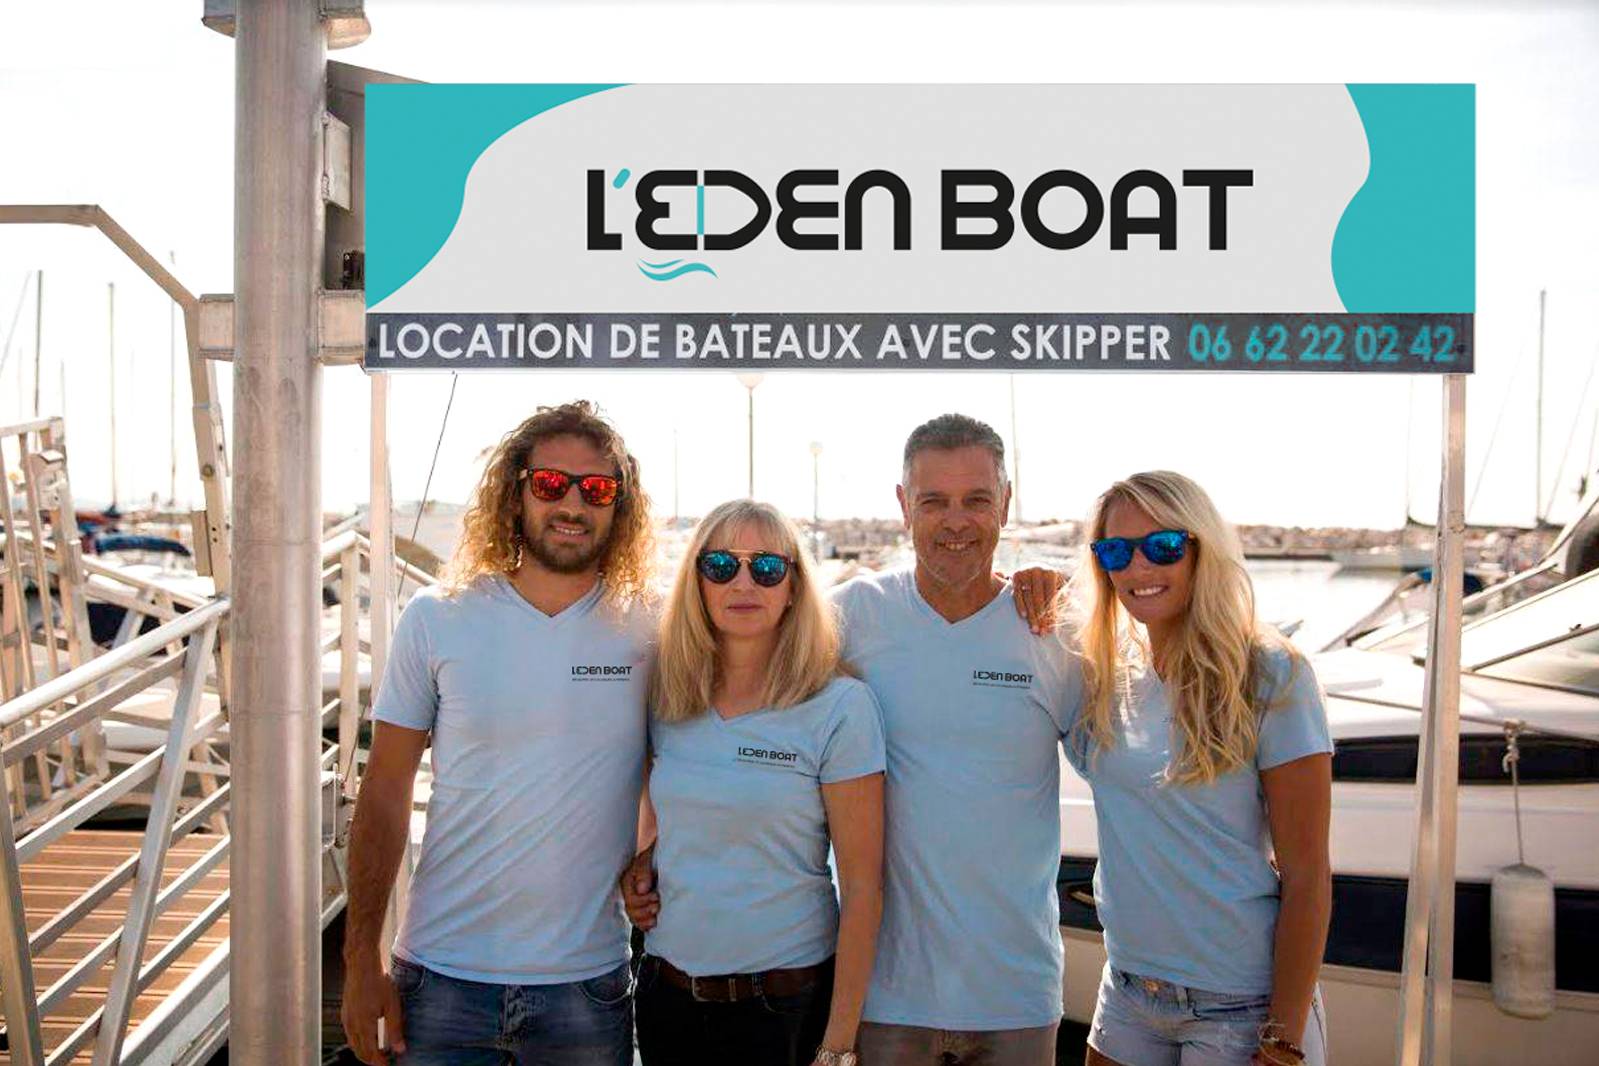 L'Eden Boat - Location de bateaux avec skipper - Marseille - La Ciotat - Cassis